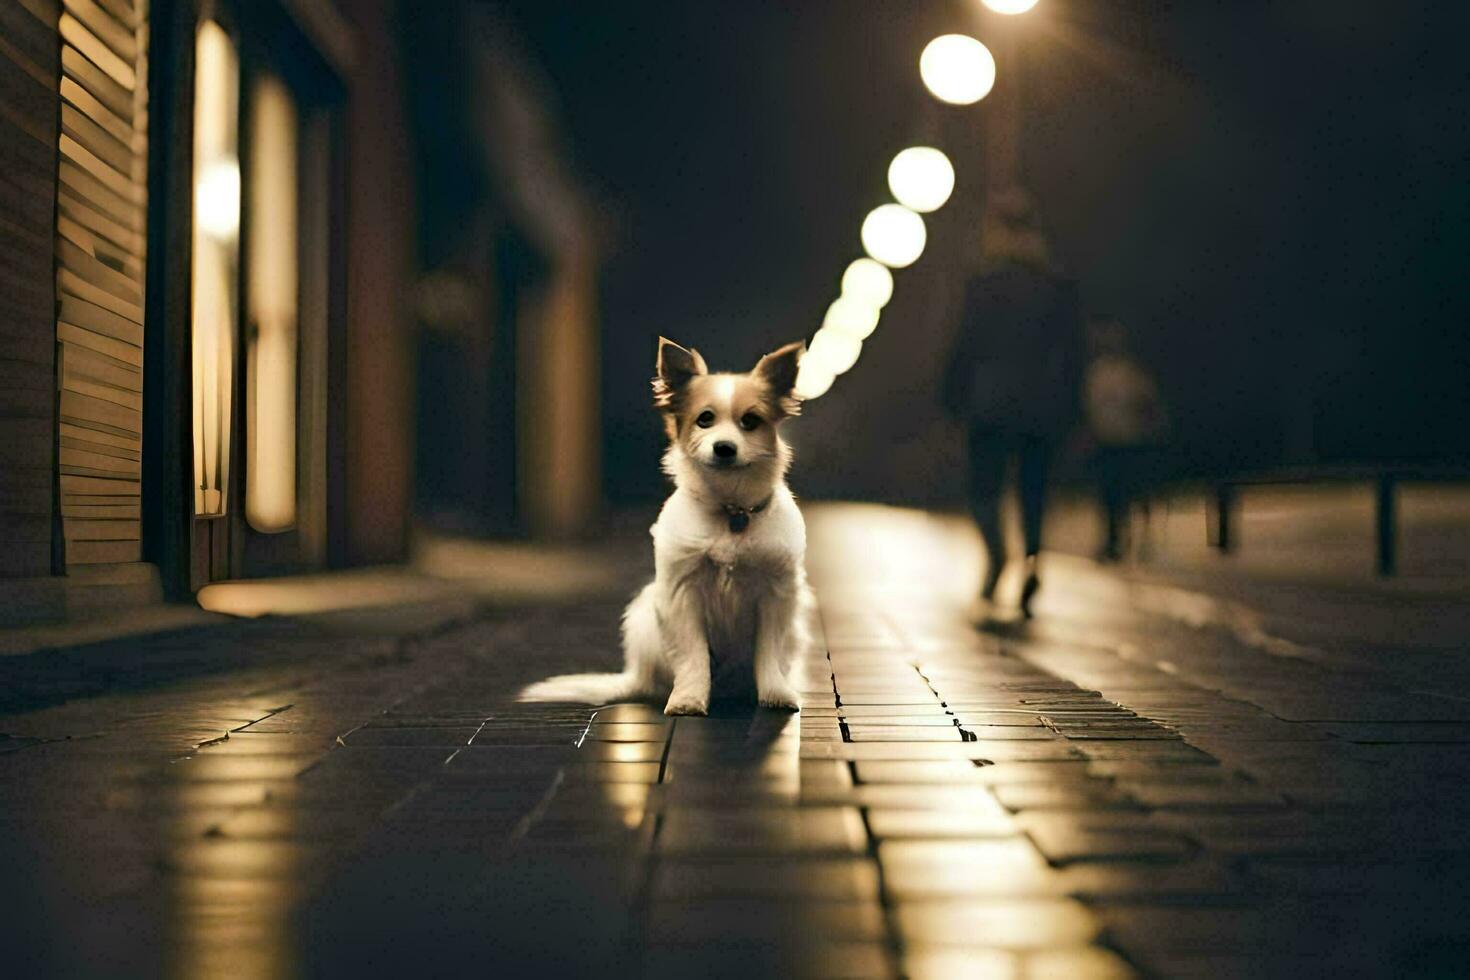 a dog sitting on the sidewalk at night. AI-Generated photo